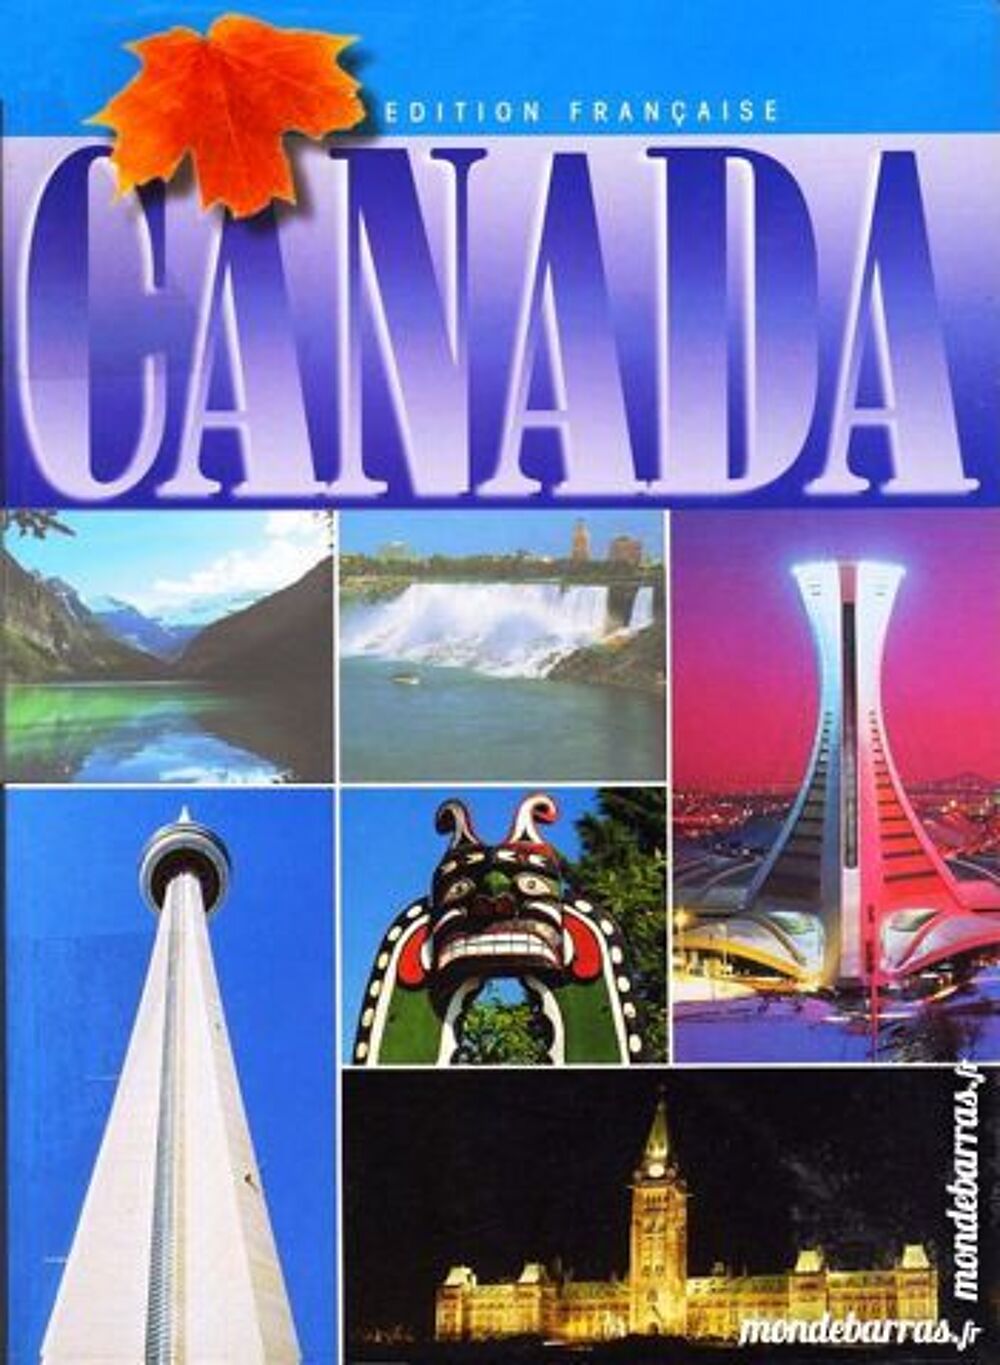 CANADA - Guide photos / prixportcompris Livres et BD